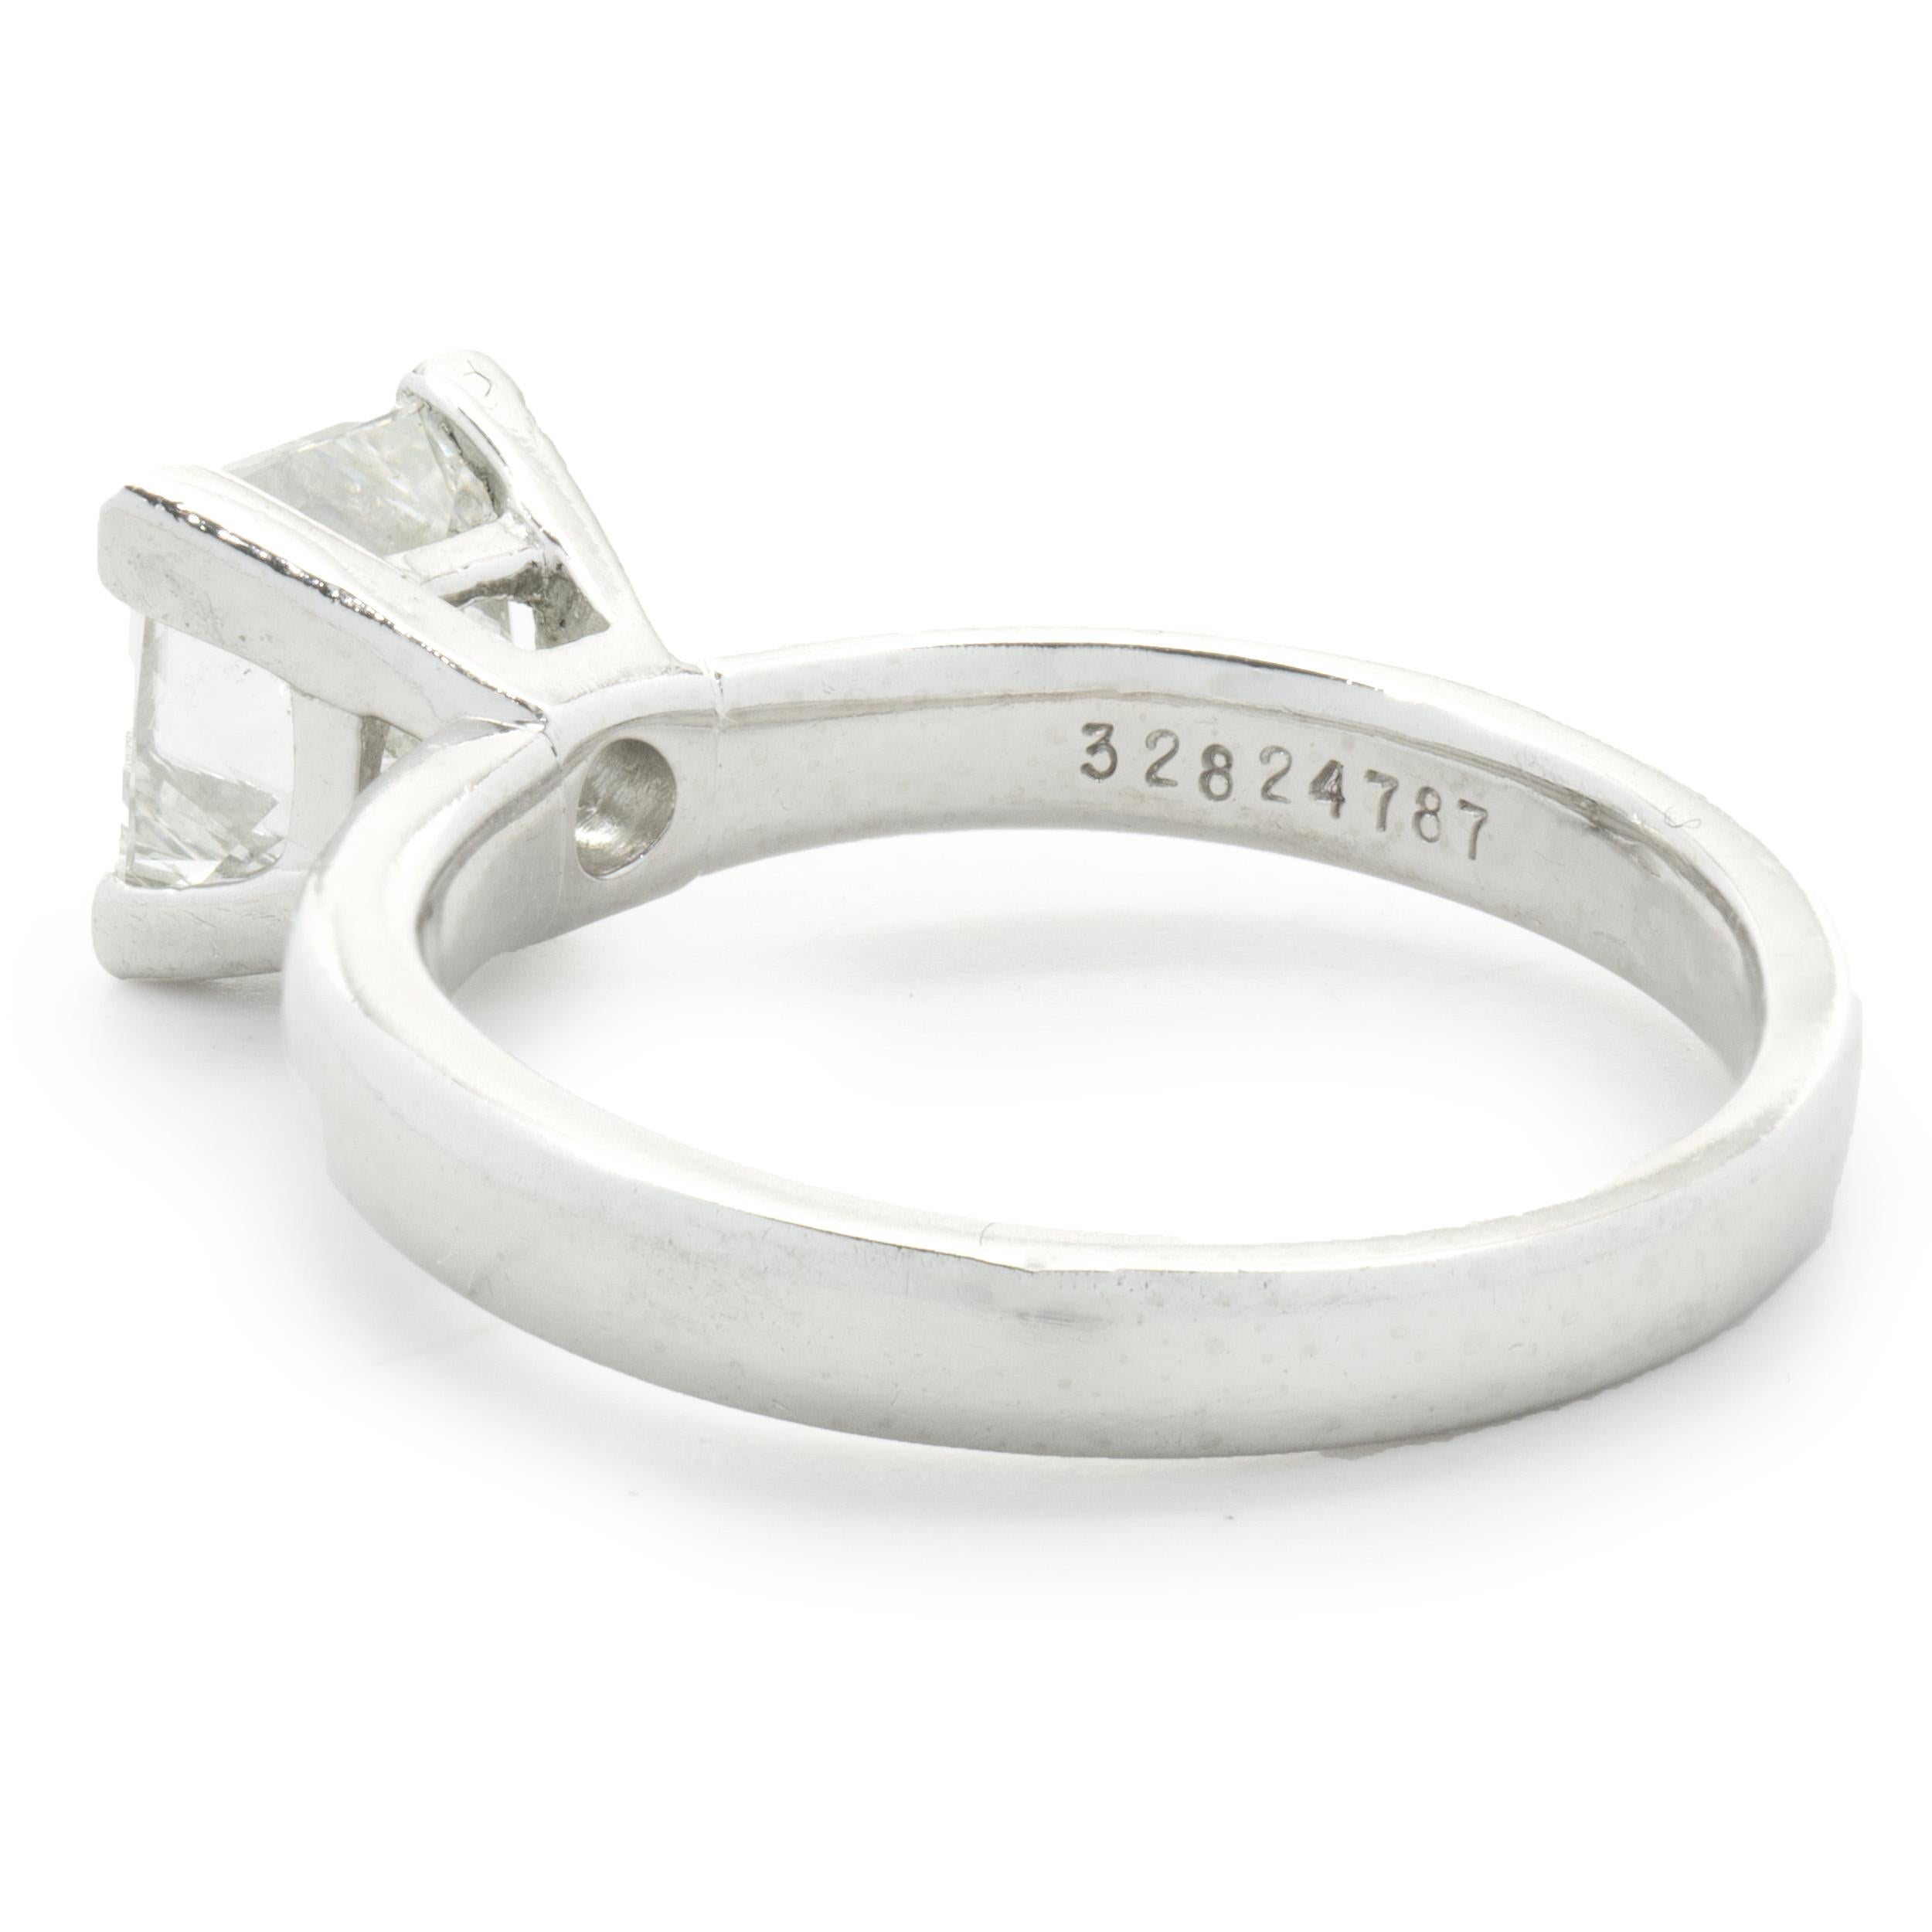 Platinum Princess Cut Diamond Engagement Ring In Excellent Condition For Sale In Scottsdale, AZ